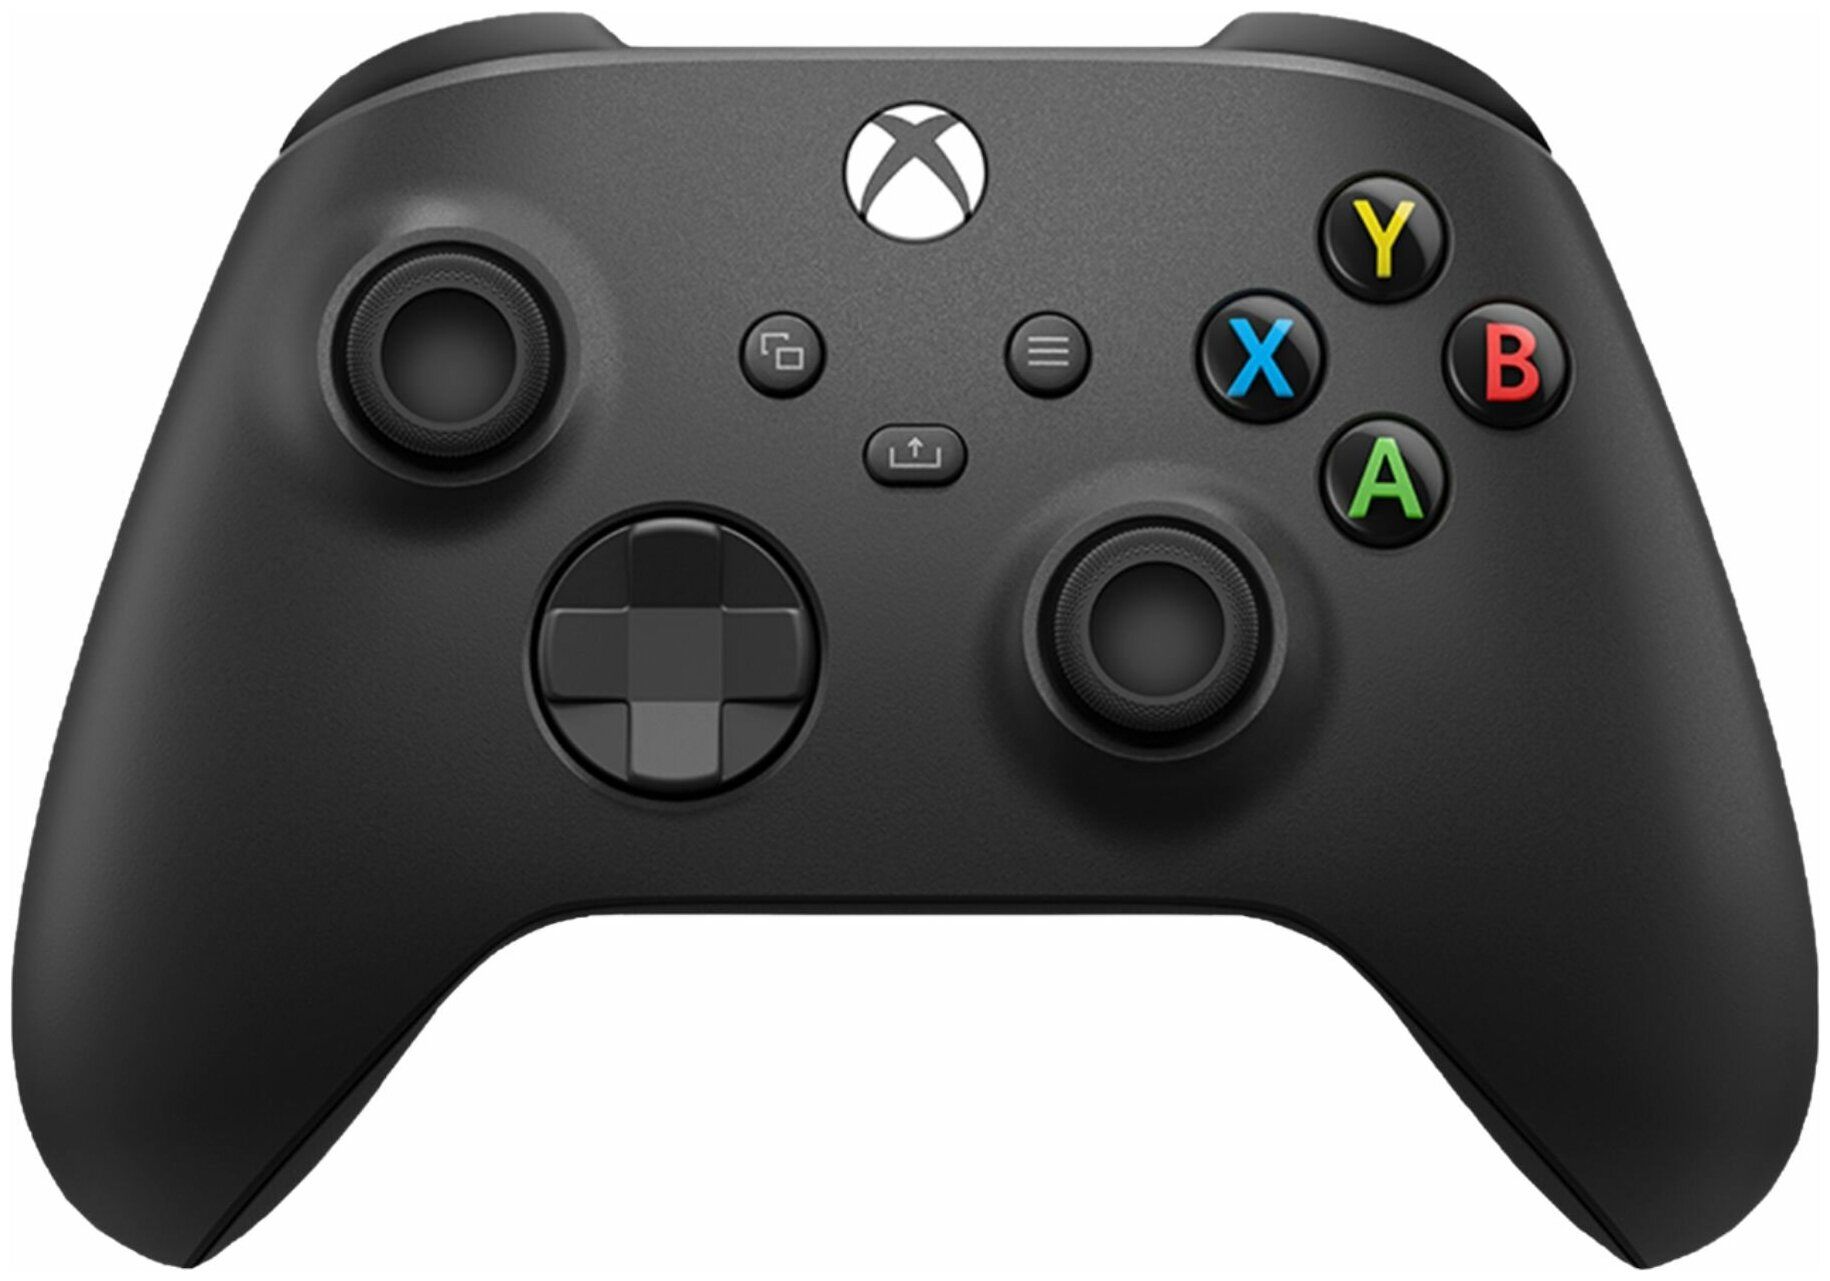 Беспроводной геймпад Microsoft Xbox Series